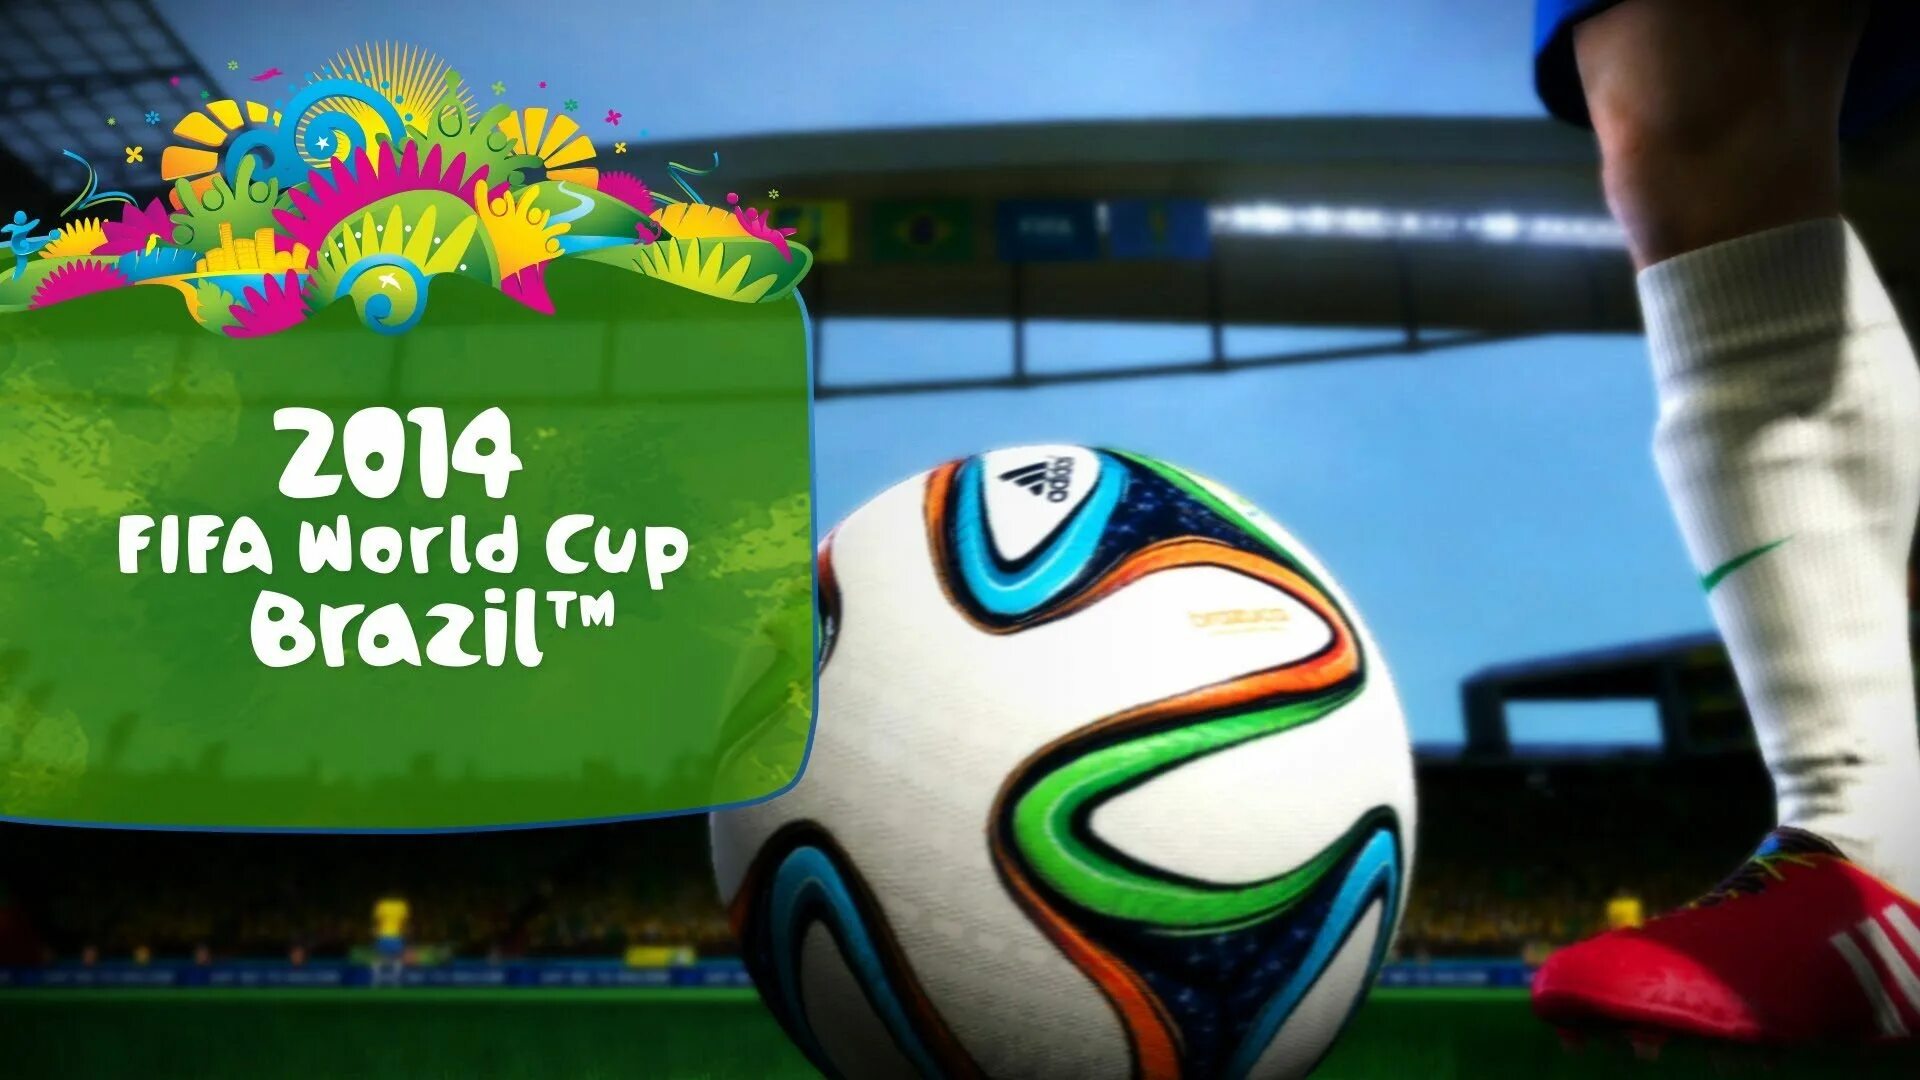 2014 FIFA World Cup Brazil для Xbox 360. ФИФА 14 ворлд кап Бразилия. ФИФА 14 ворлд кап 2014 Бразилия. ЧМ 2014 В FIFA 14.